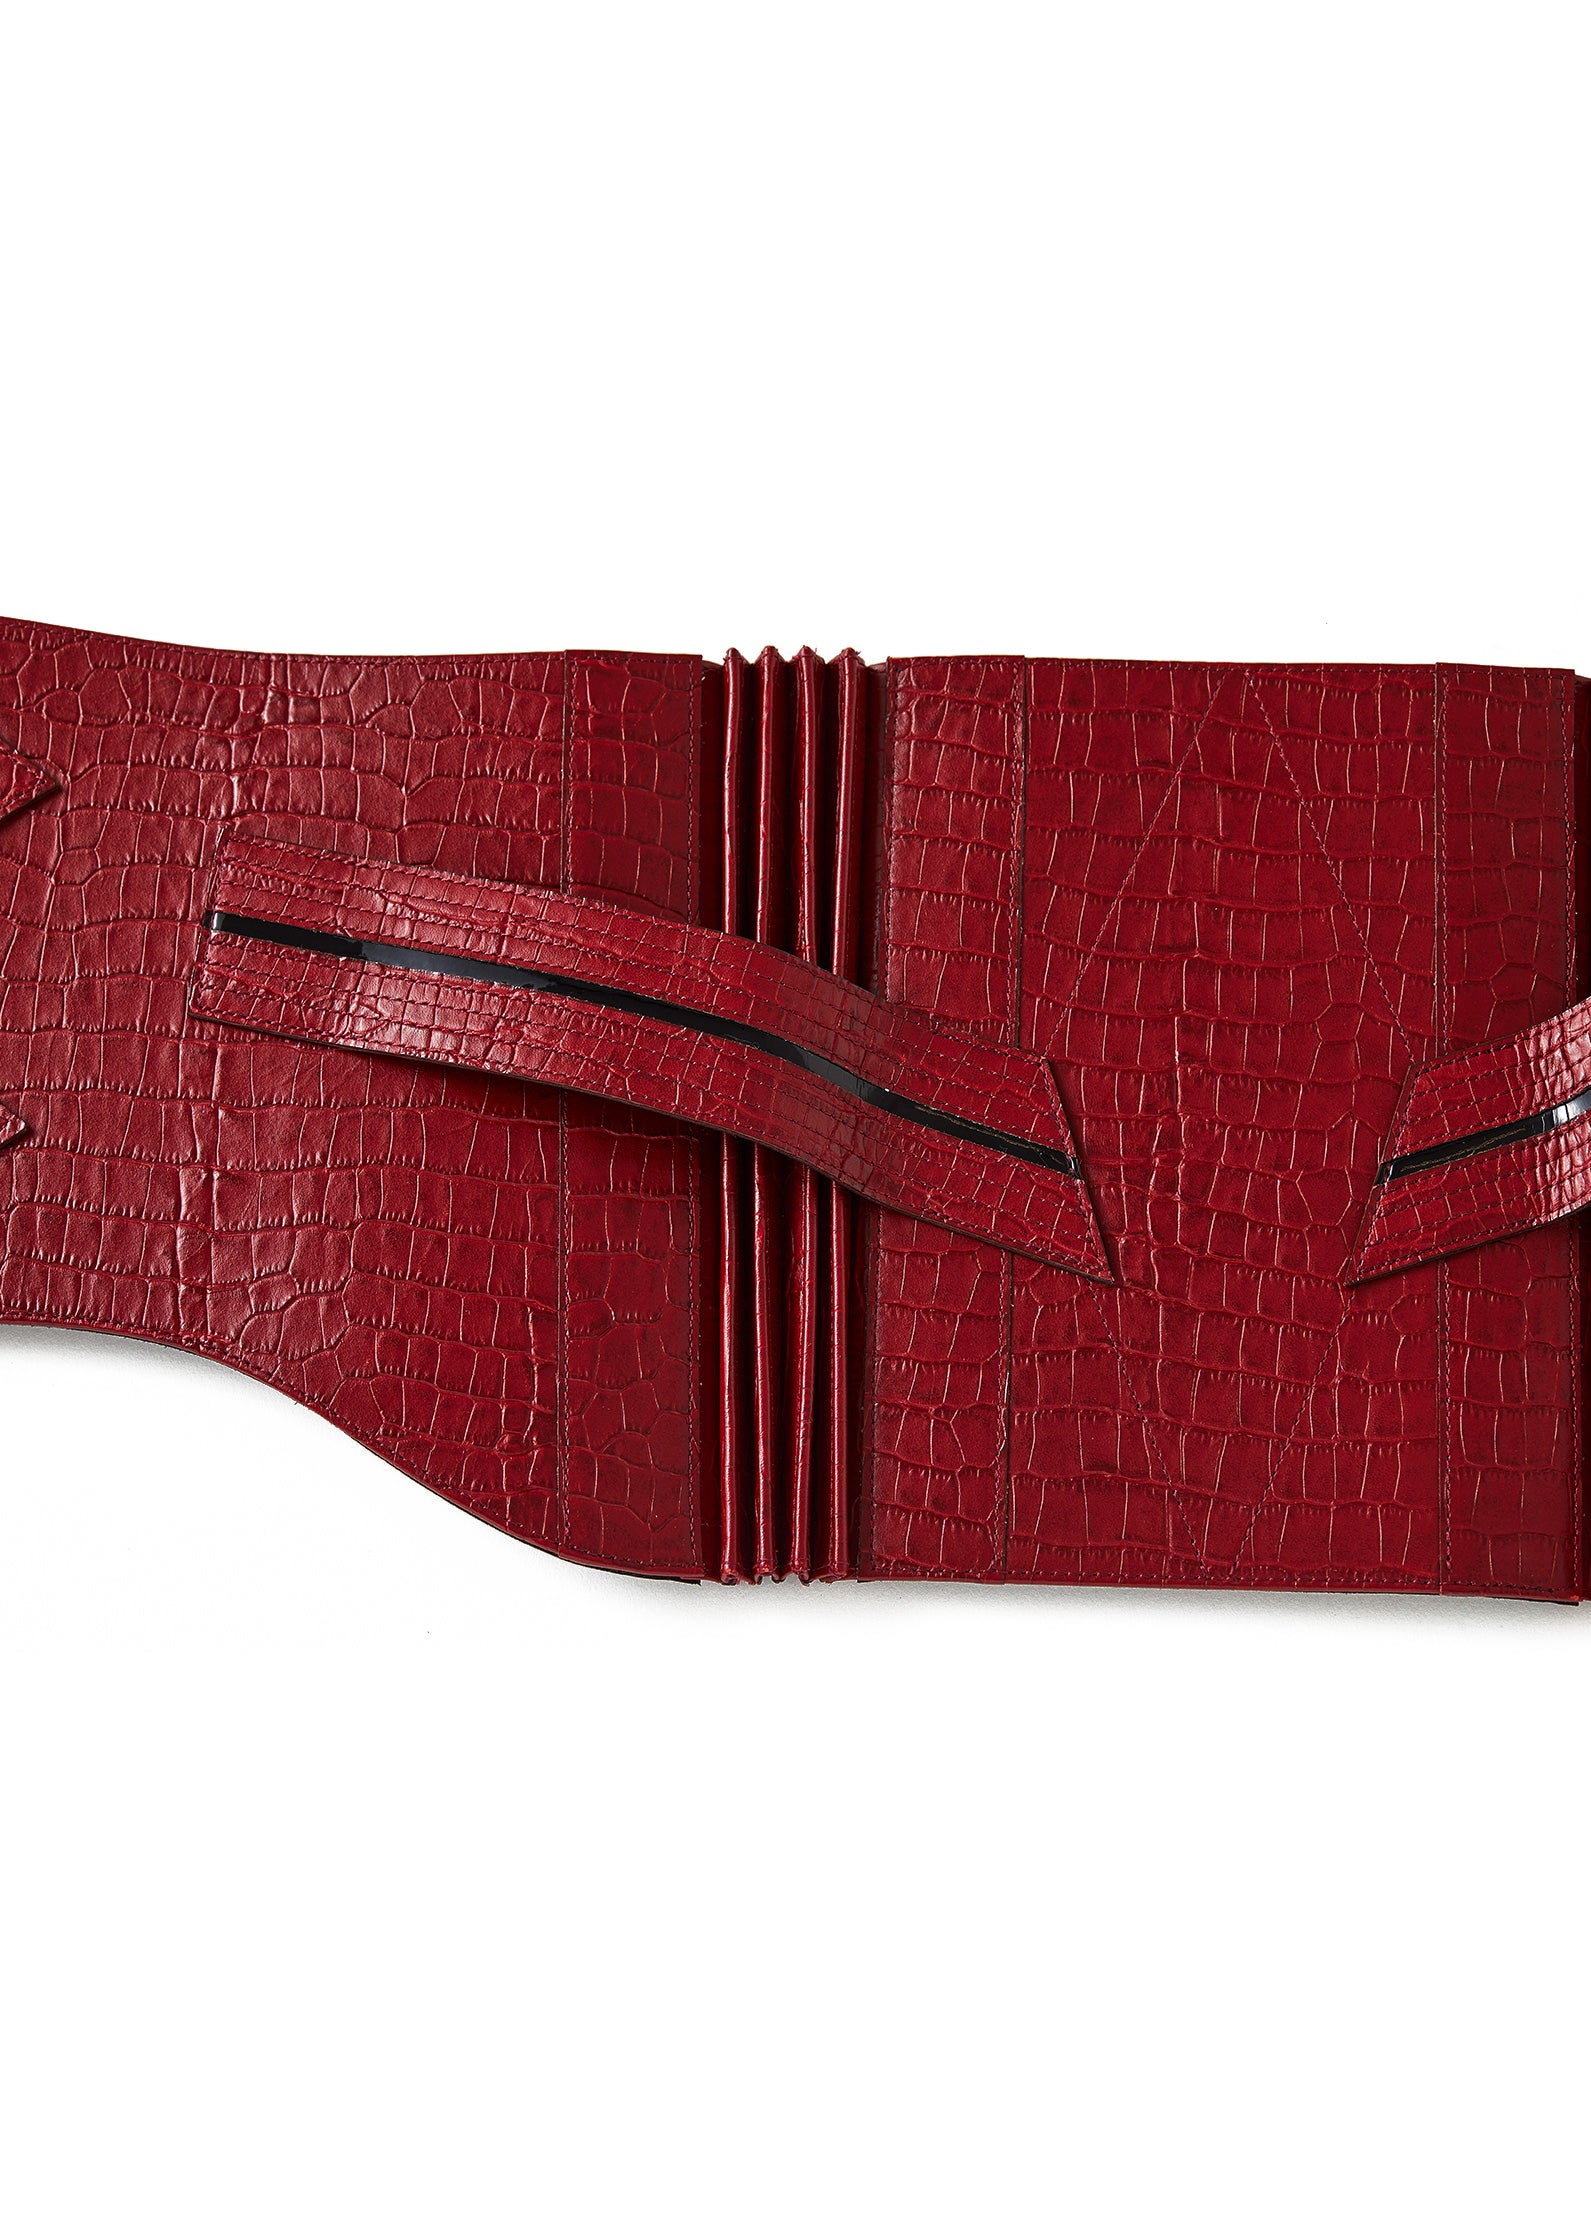 Obi belt "Croc red" leather